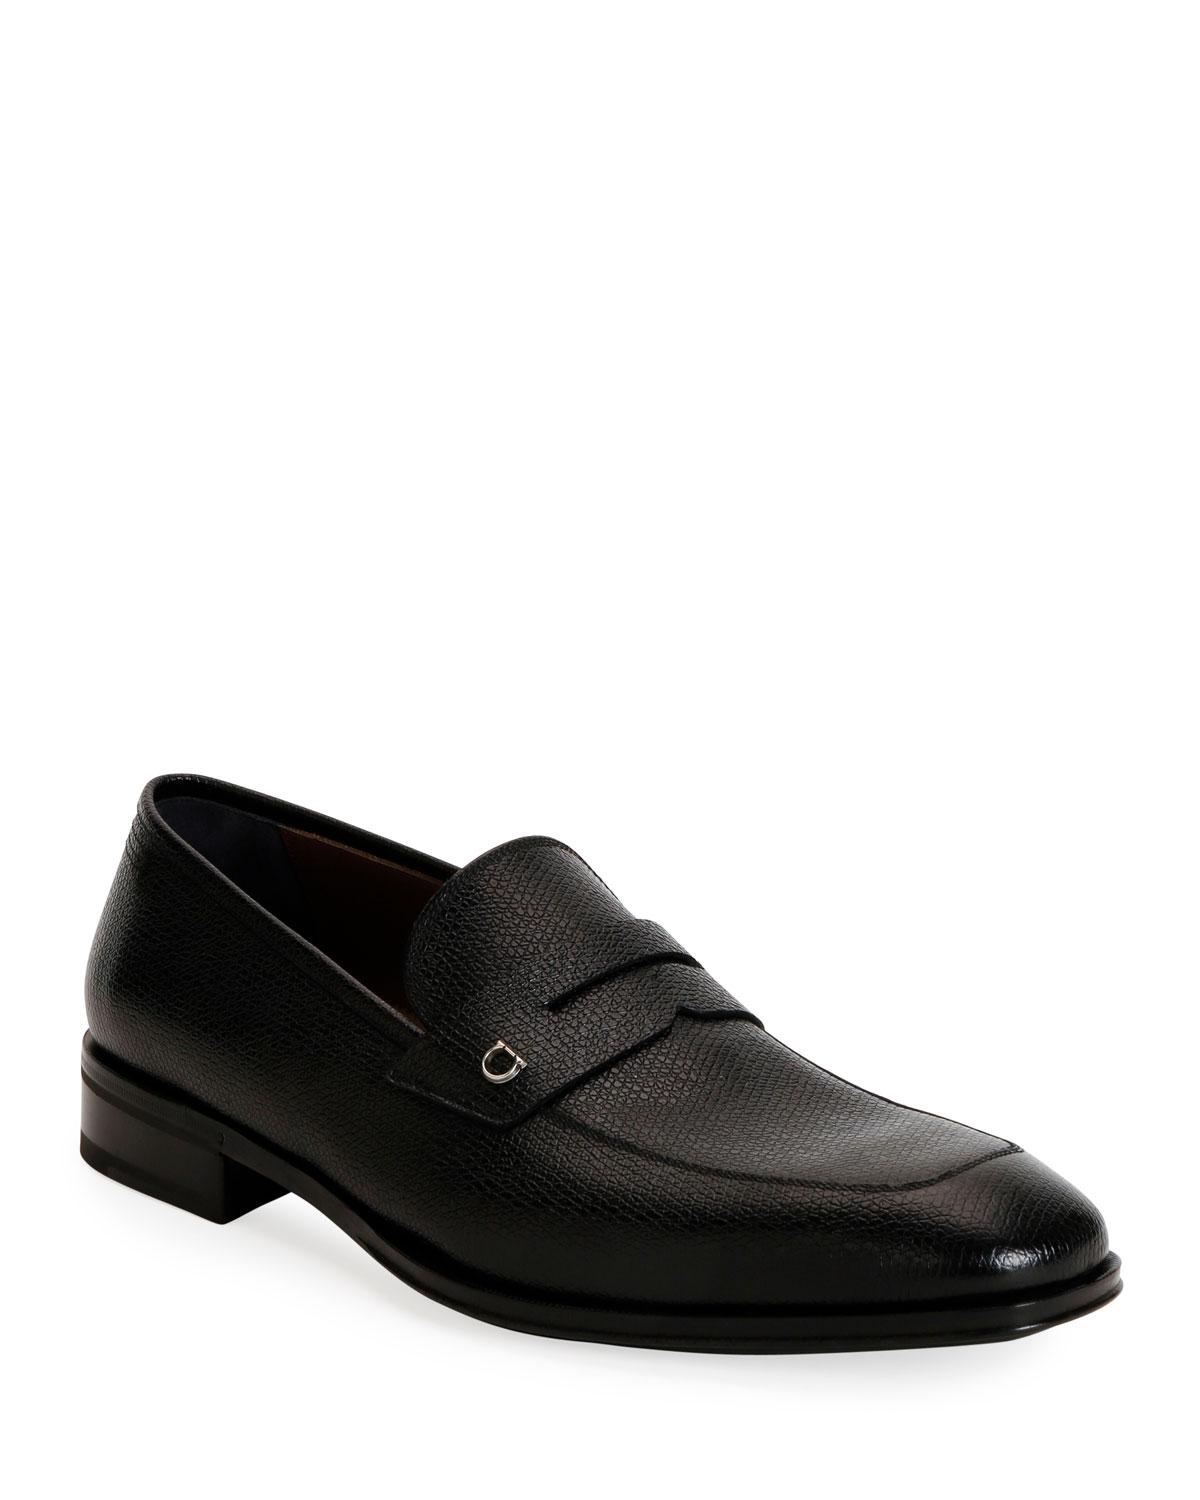 Ferragamo Men's Tito Textured Leather Penny Loafers in Black for Men - Lyst